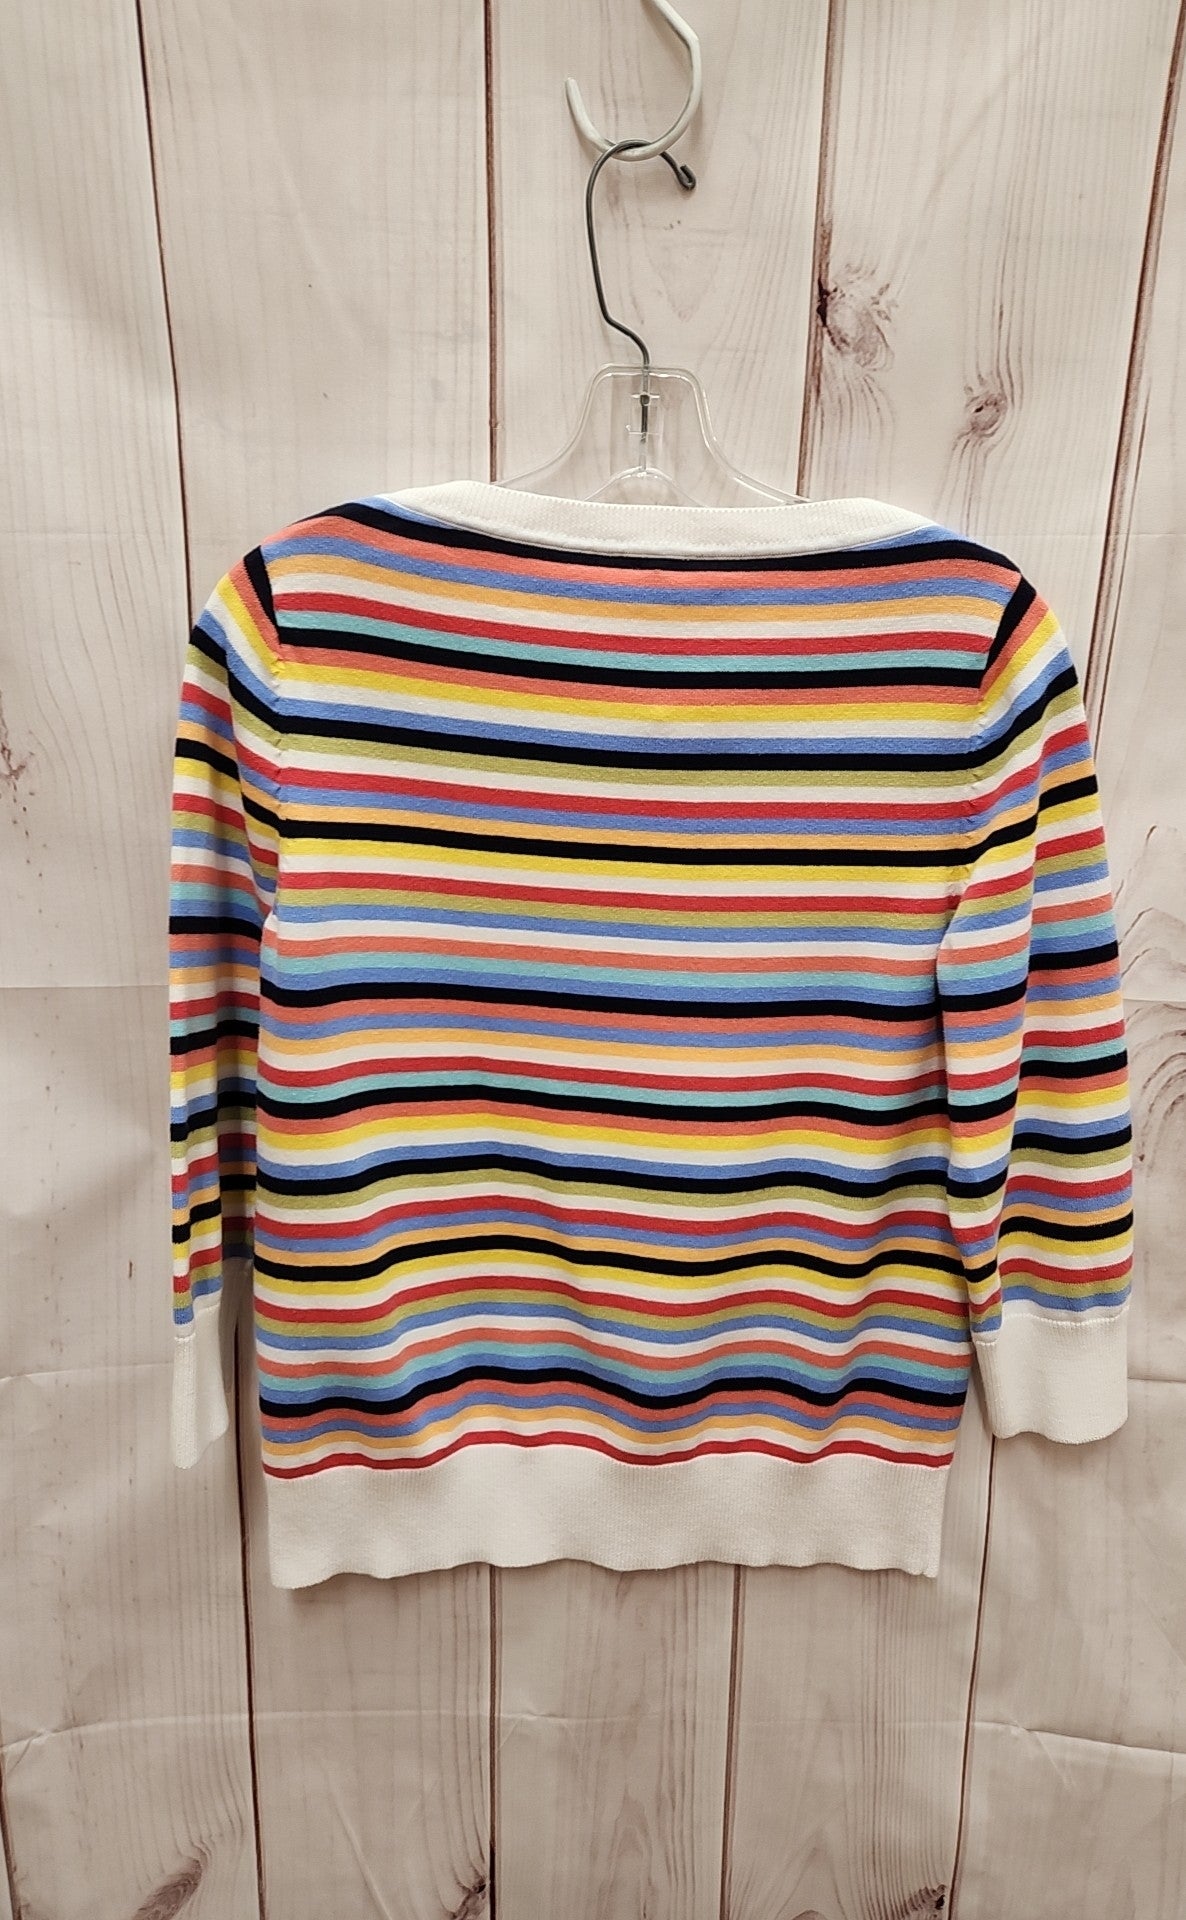 Talbots Women's Size M Multi-Color Sweater